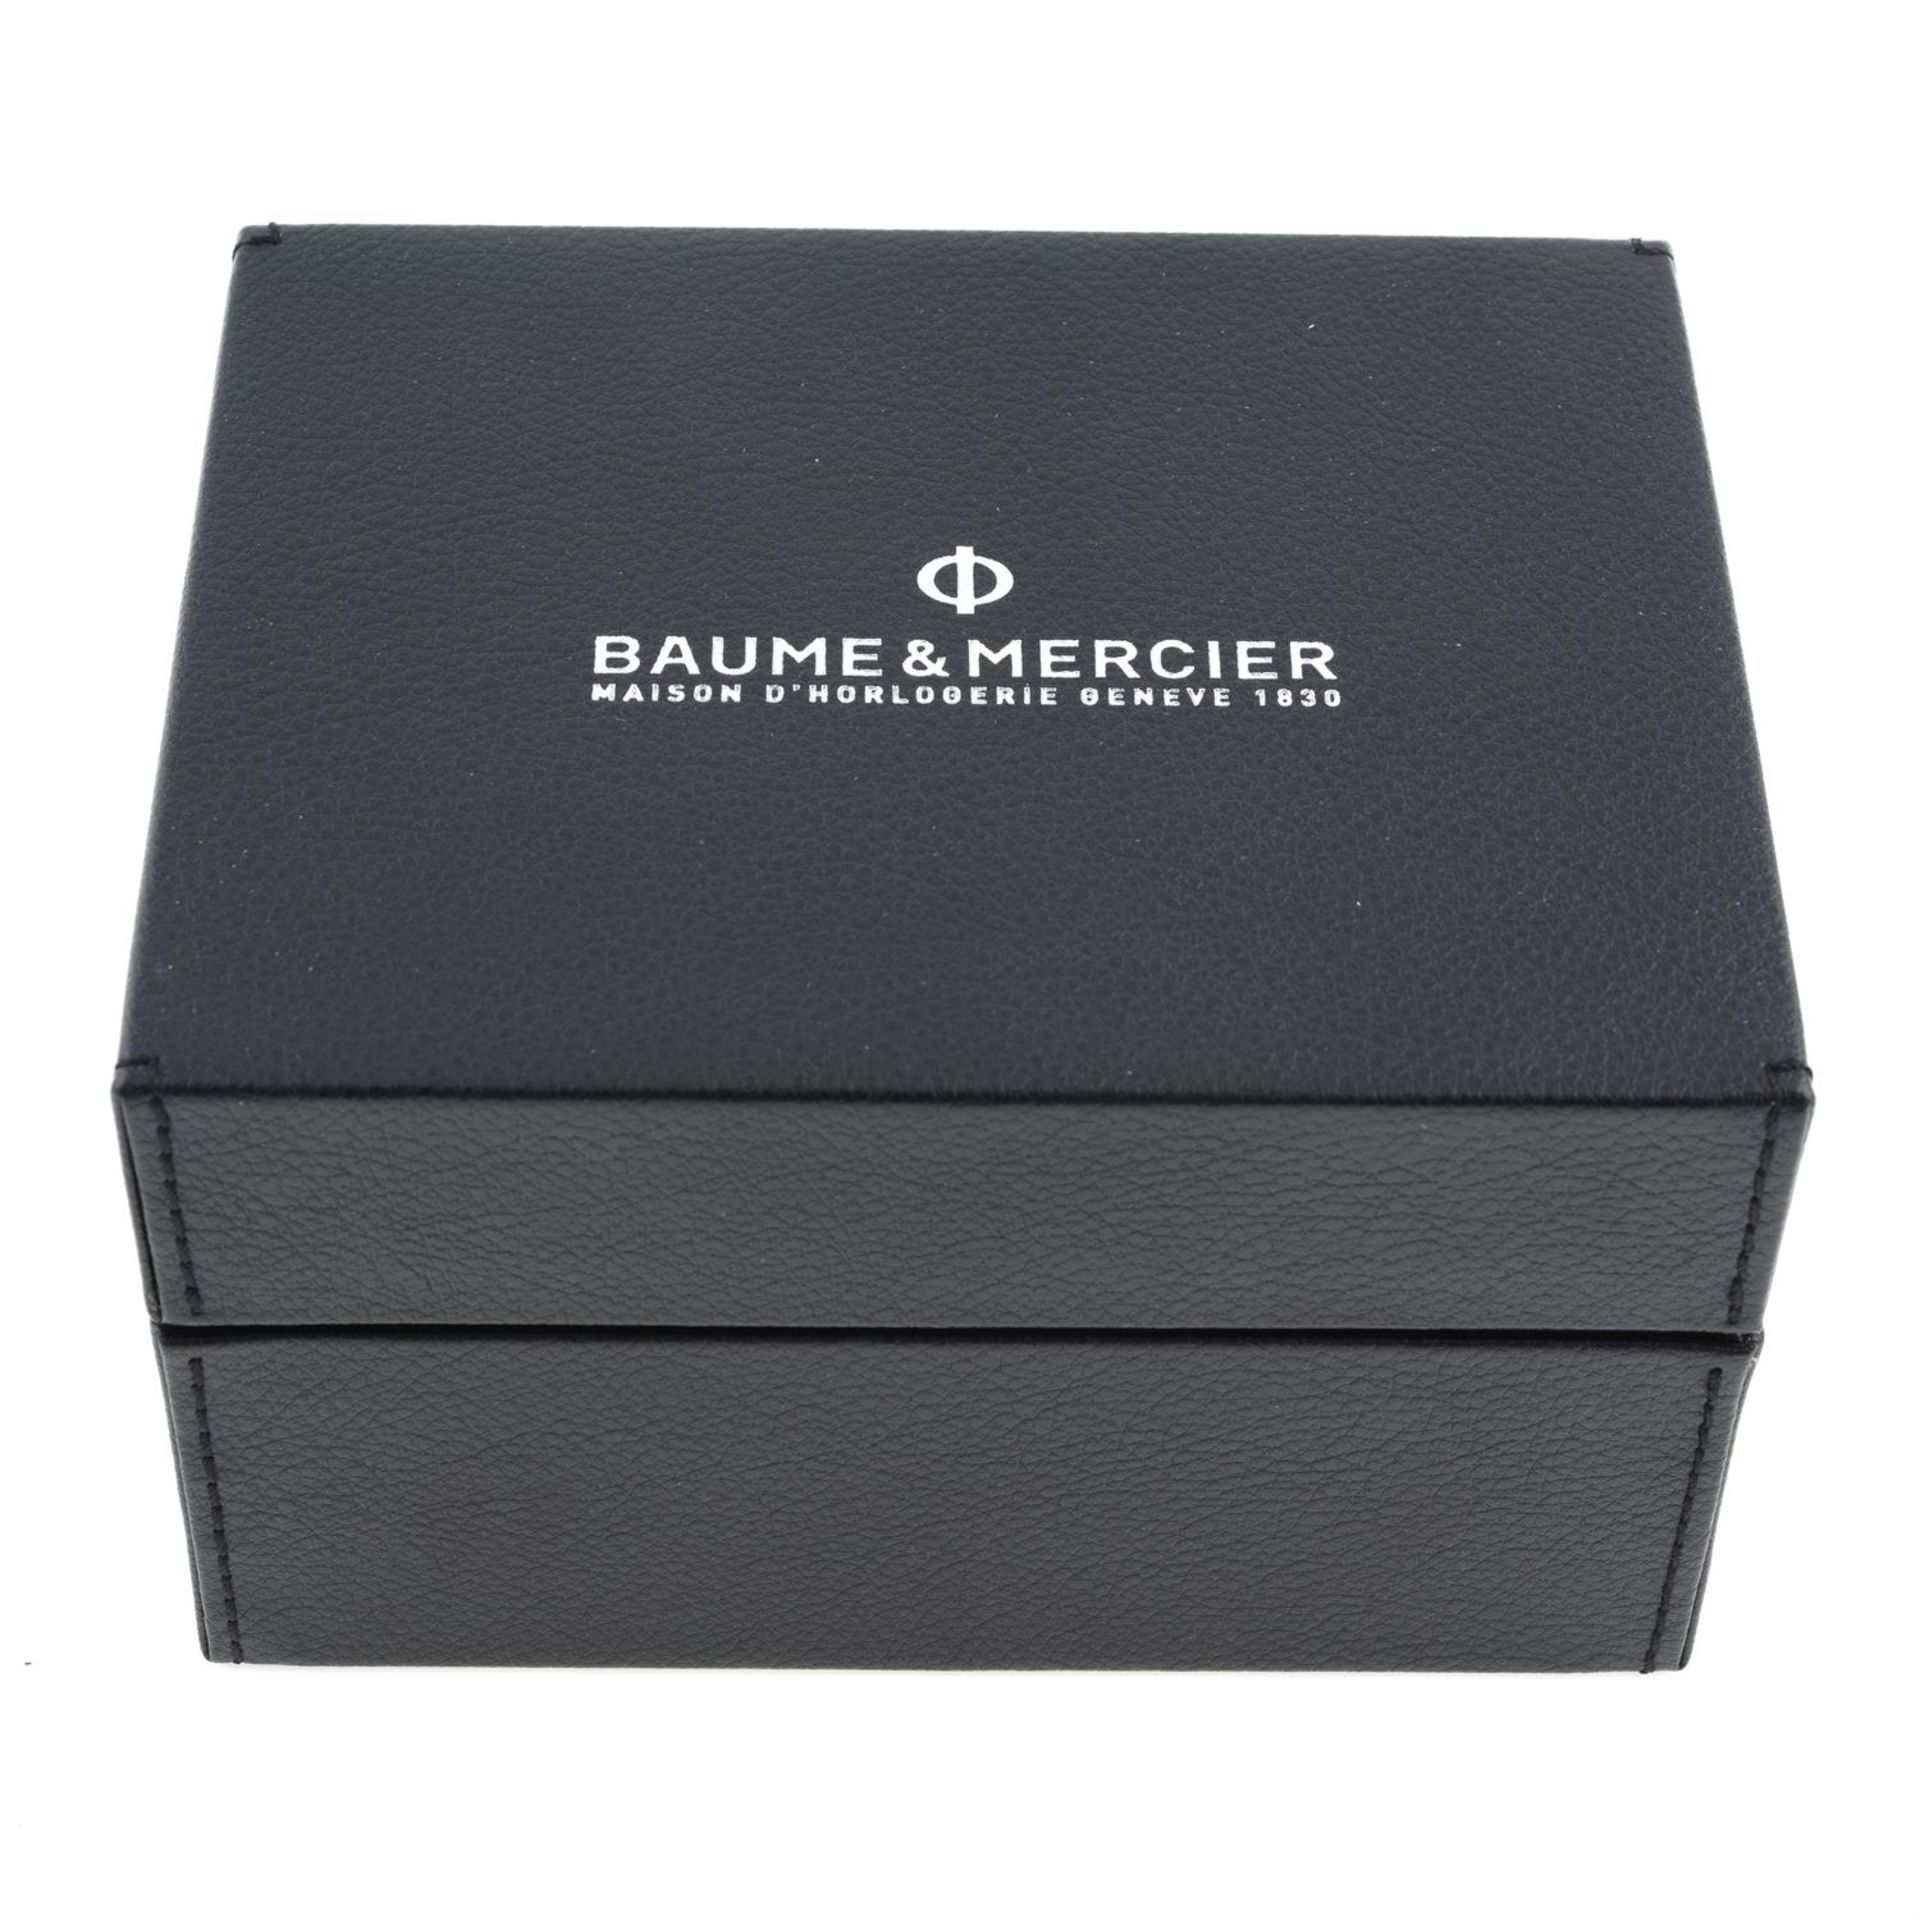 Baume & Mercier - a Riviera watch, 37mm. - Image 6 of 6